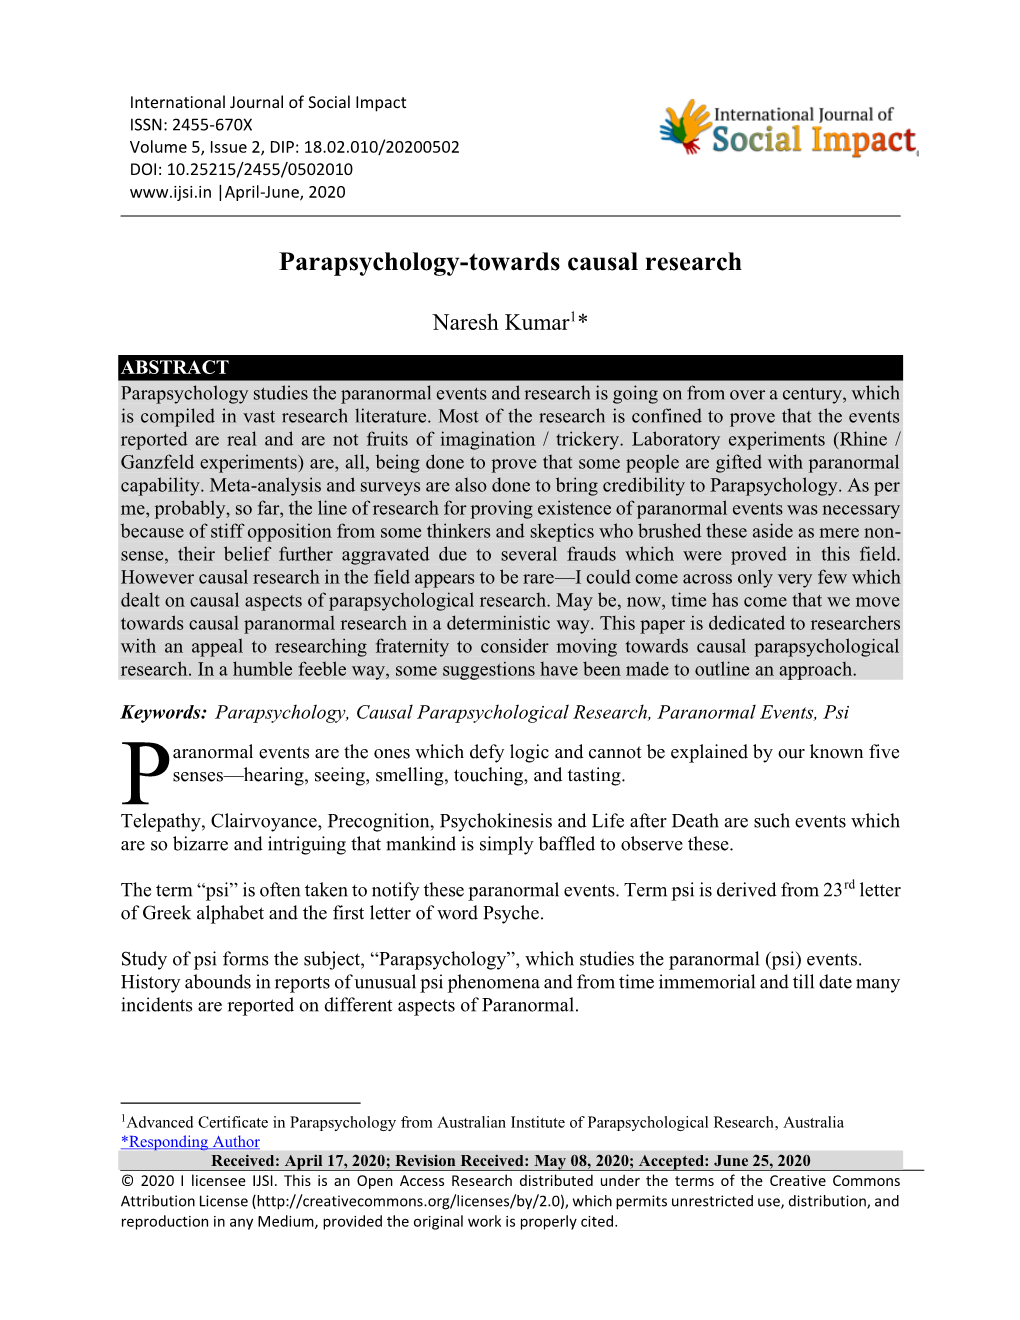 Parapsychology-Towards Causal Research